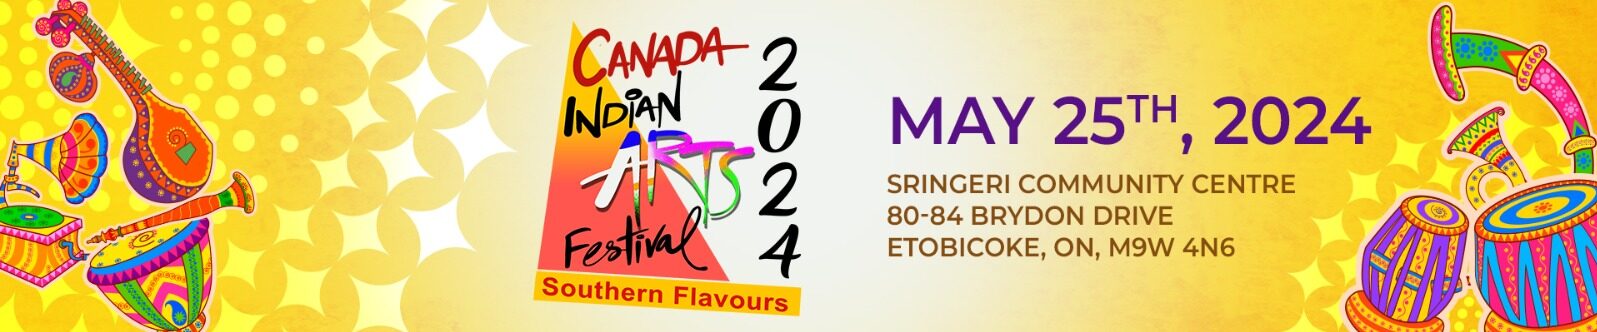 Canada Indian Arts Festival